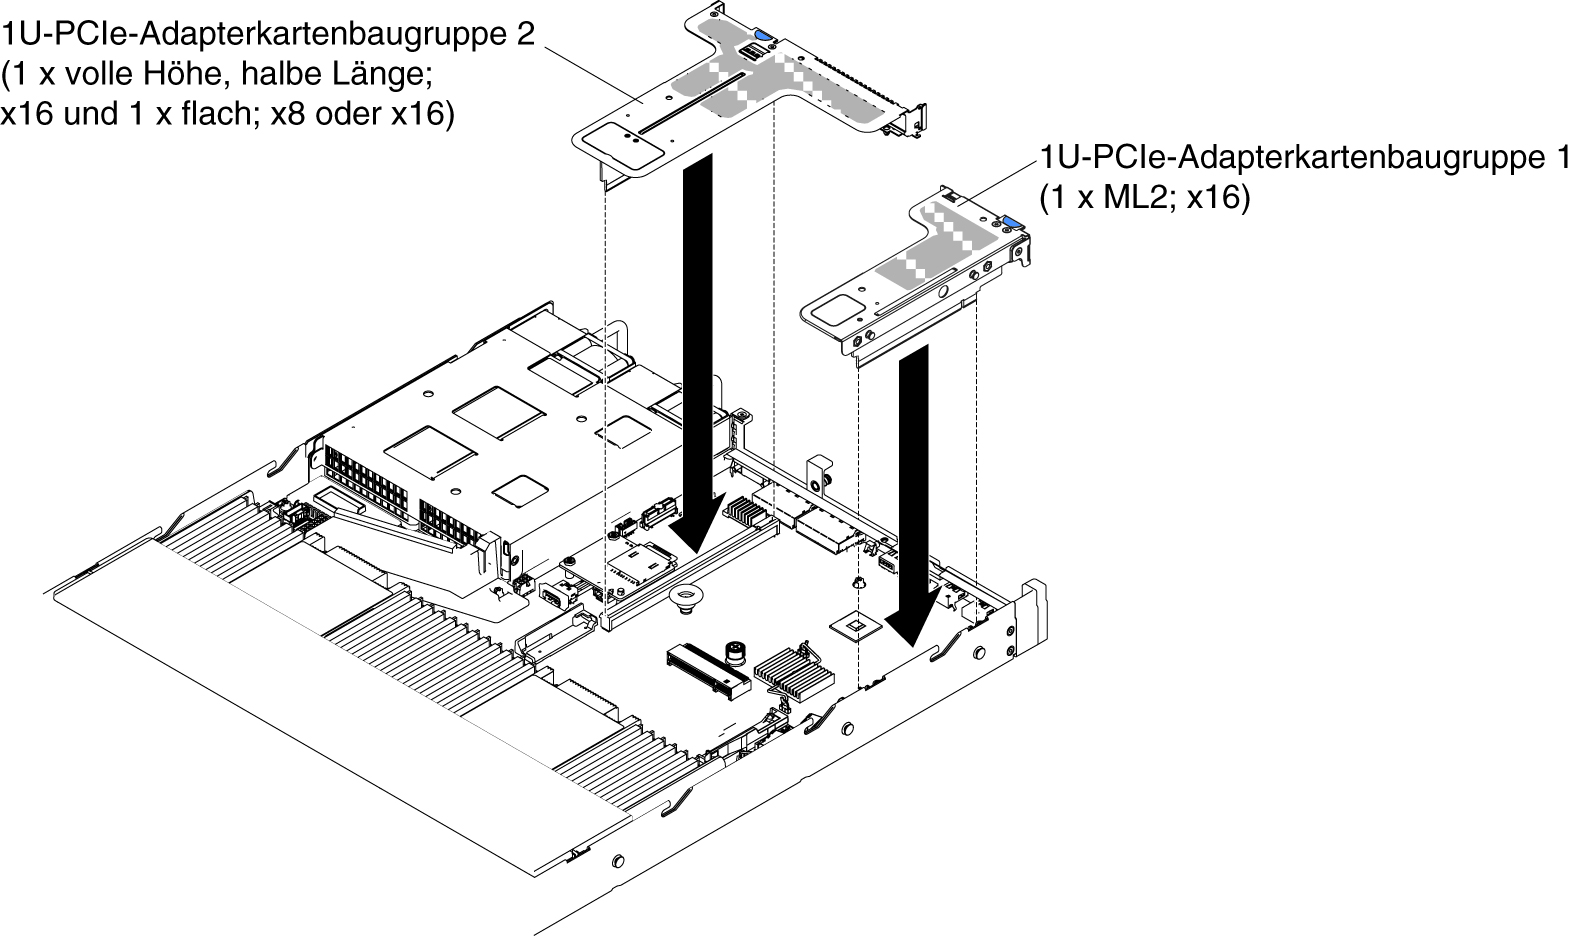 PCI-Adapterkartenbaugruppe installieren (2)